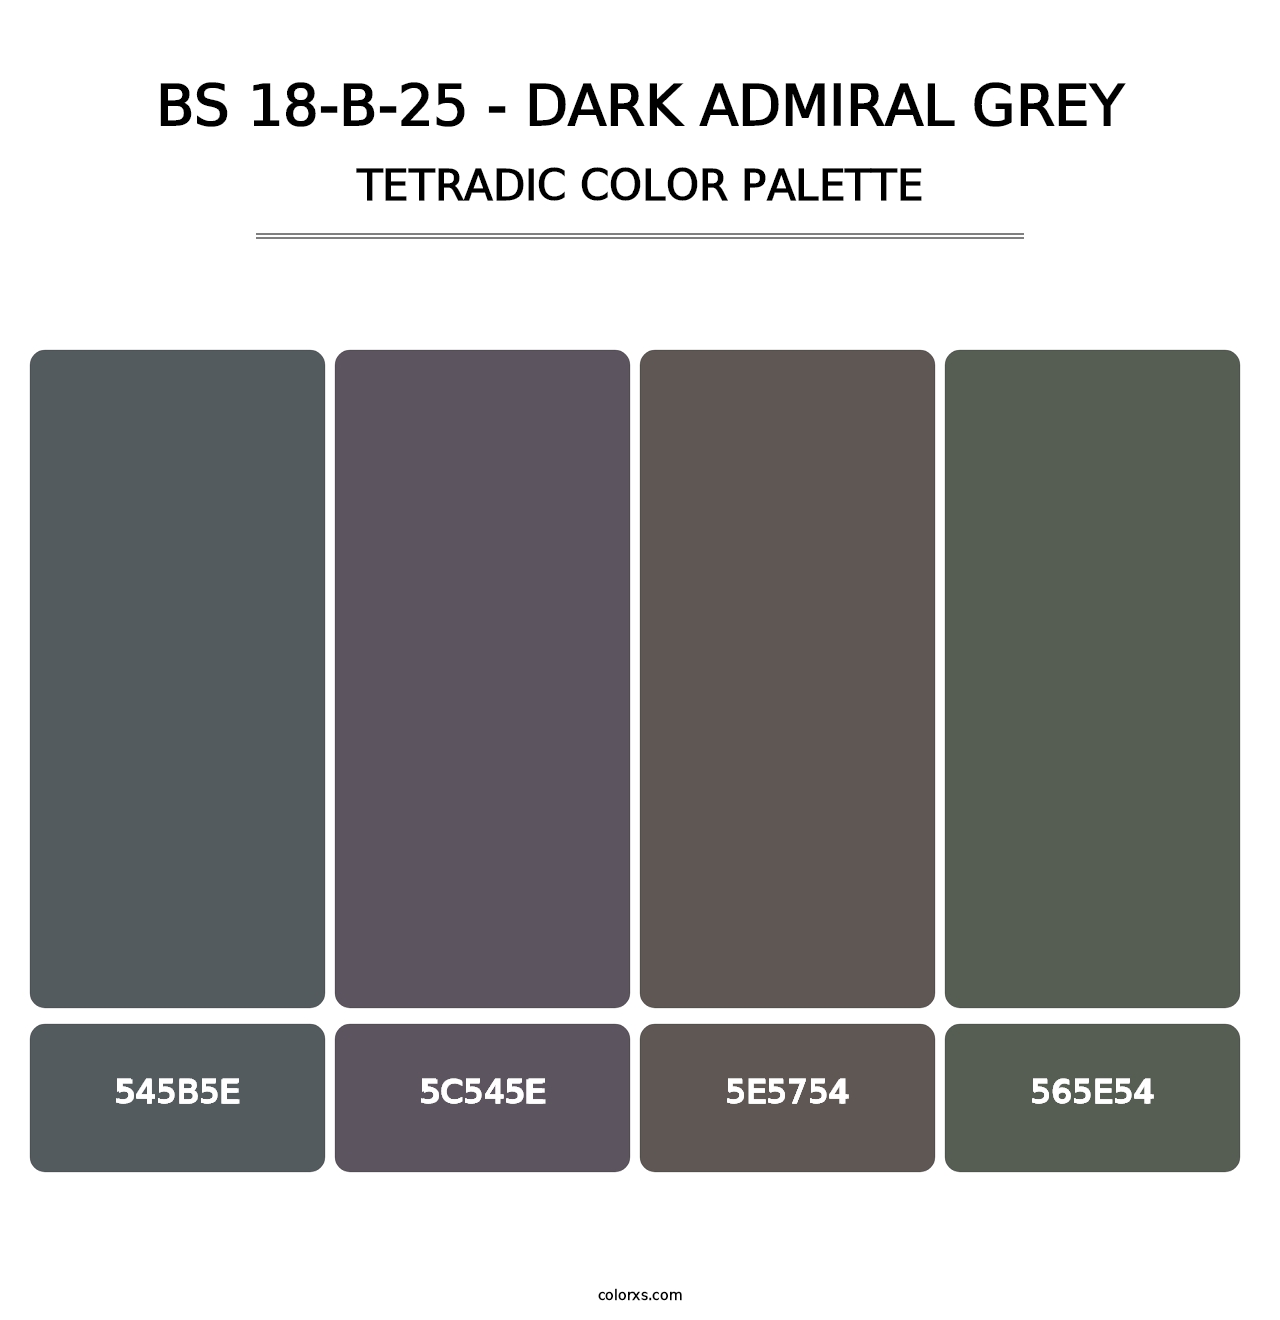 BS 18-B-25 - Dark Admiral Grey - Tetradic Color Palette